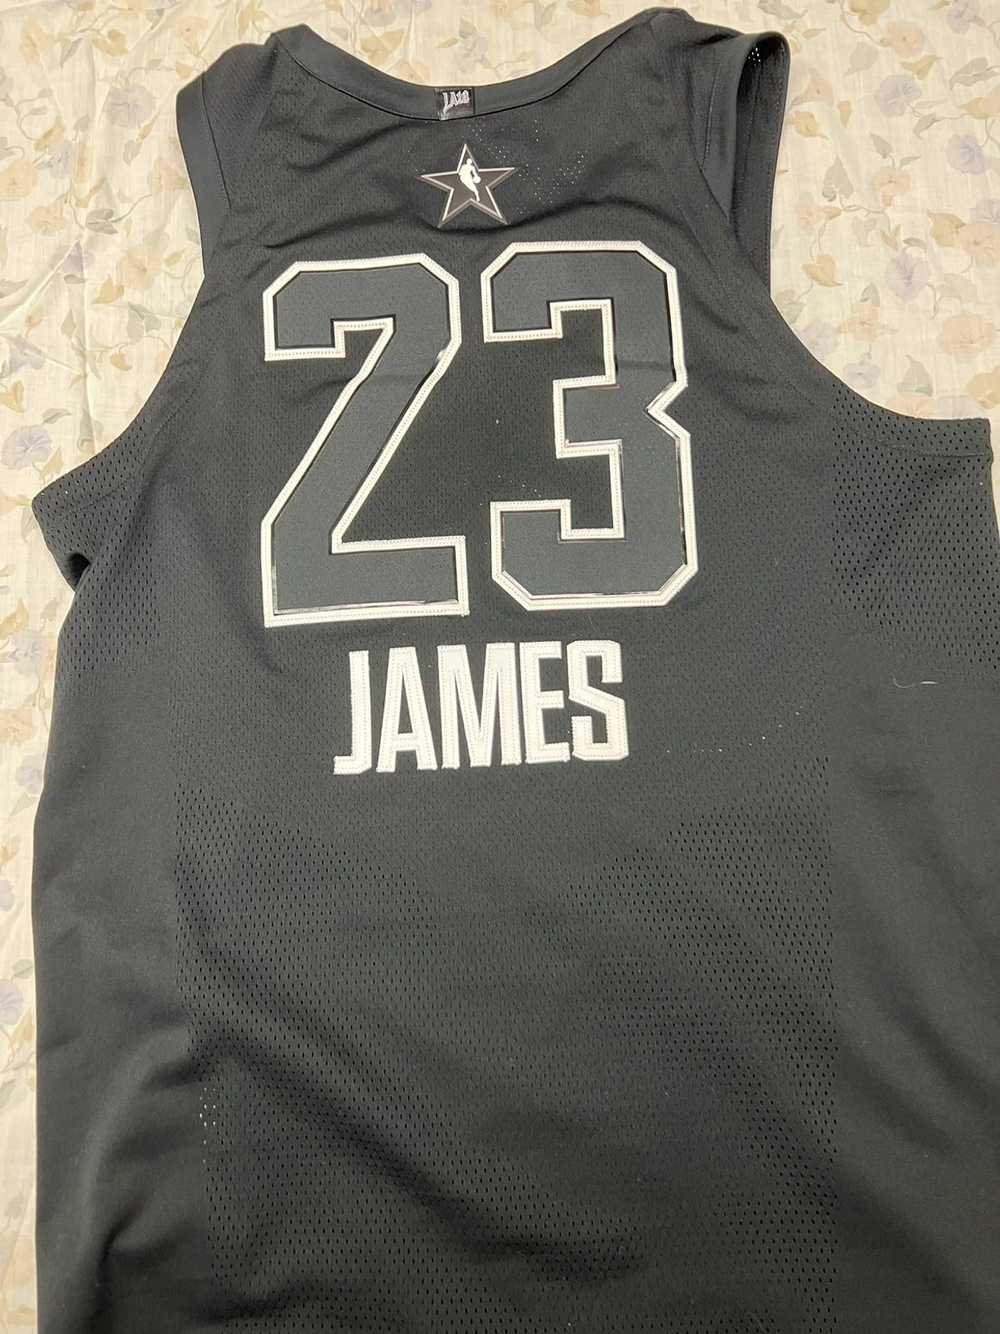 Jordan Brand All-Star 2018 Lebron James jersey - image 3